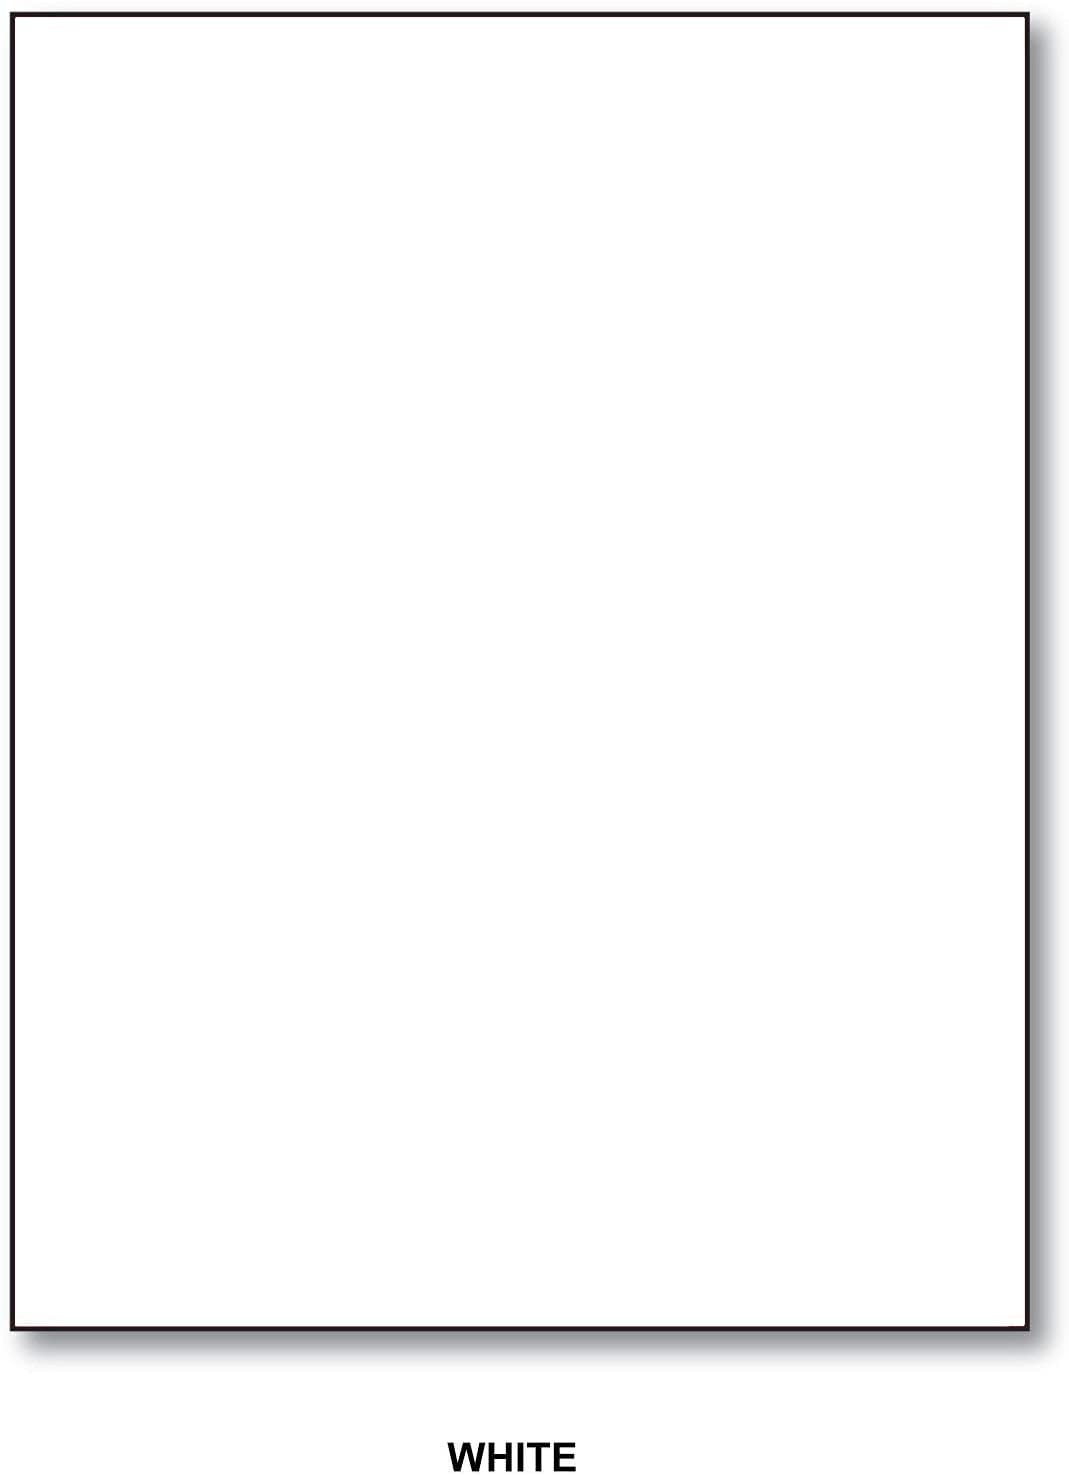 20lb White Paper Size 5 1/2" x 8 1/2" Sheets (Half Letter Size) Bright White Paper 500 Sheets